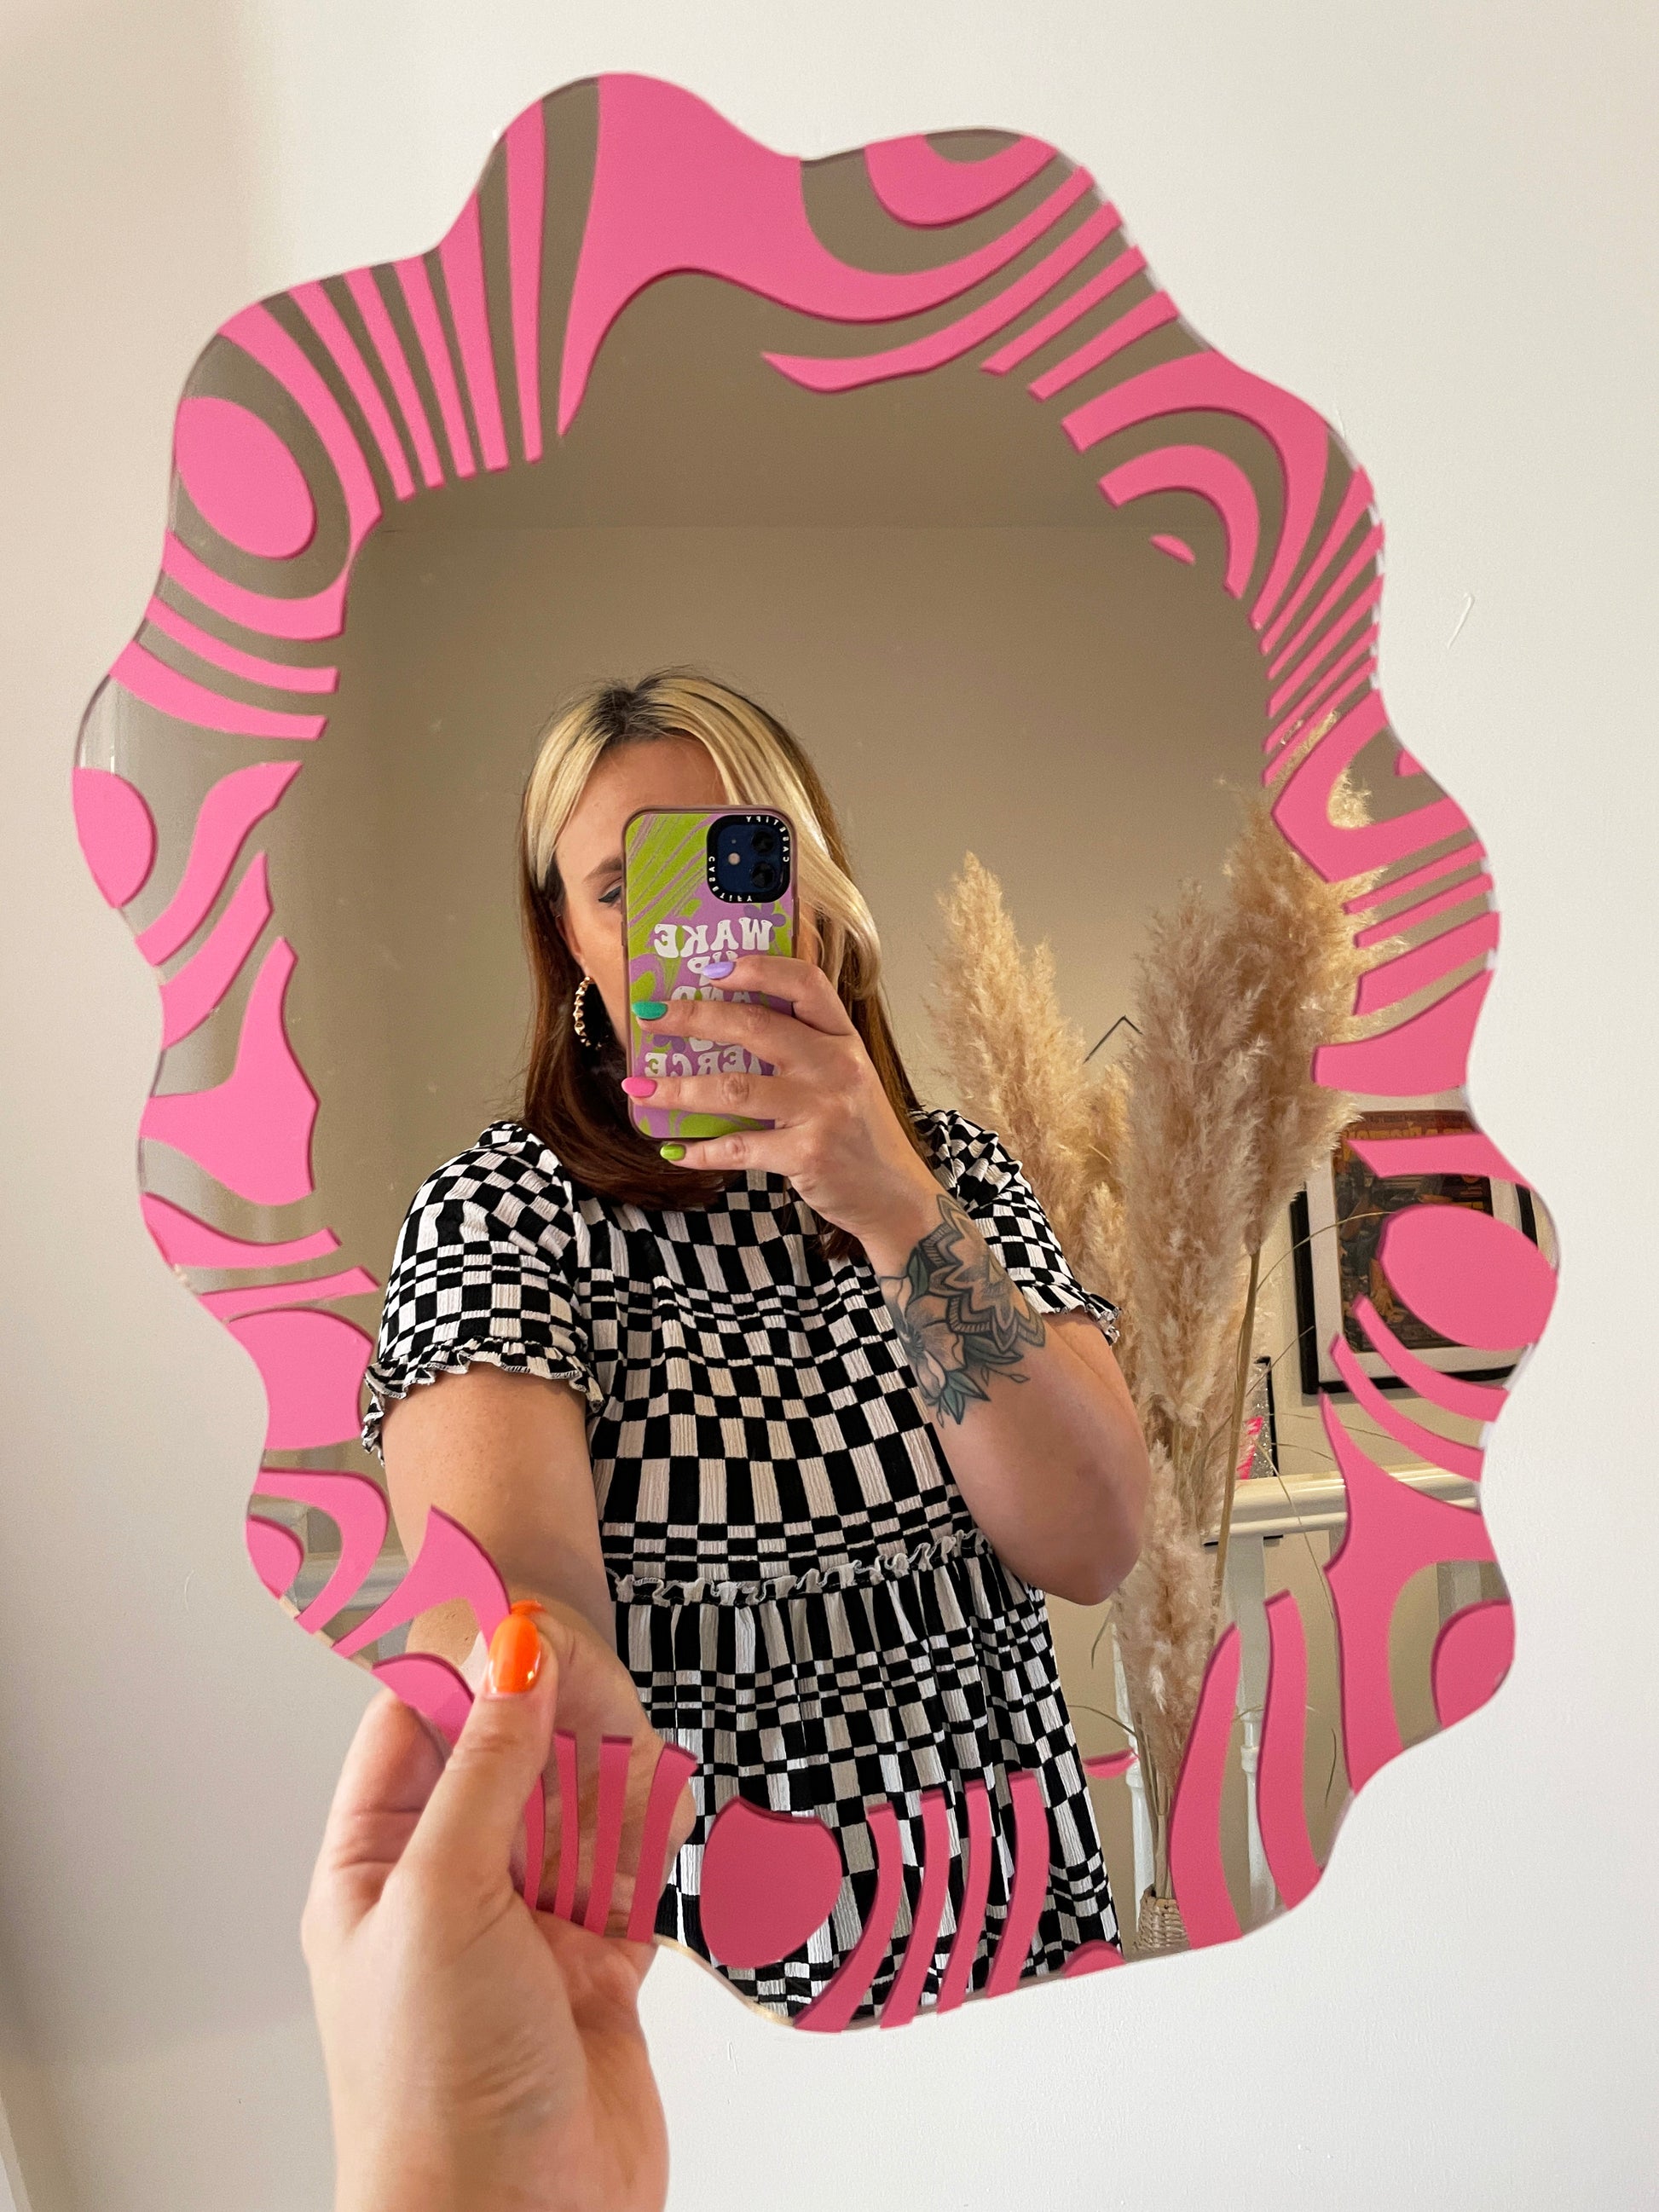 Swirly Border Wavy Mirror - PrintedWeird